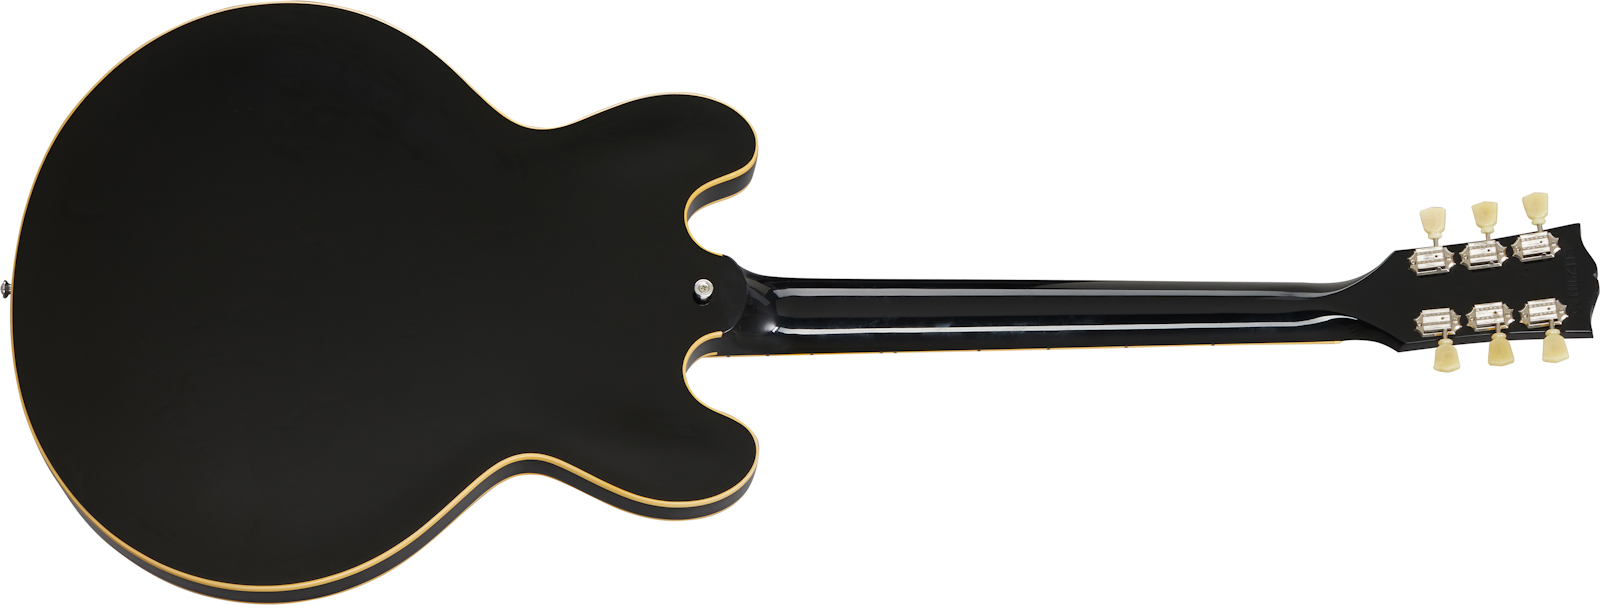 Gibson Es-335 Dot Original 2020 2h Ht Rw - Vintage Ebony - Semi hollow elektriche gitaar - Variation 1